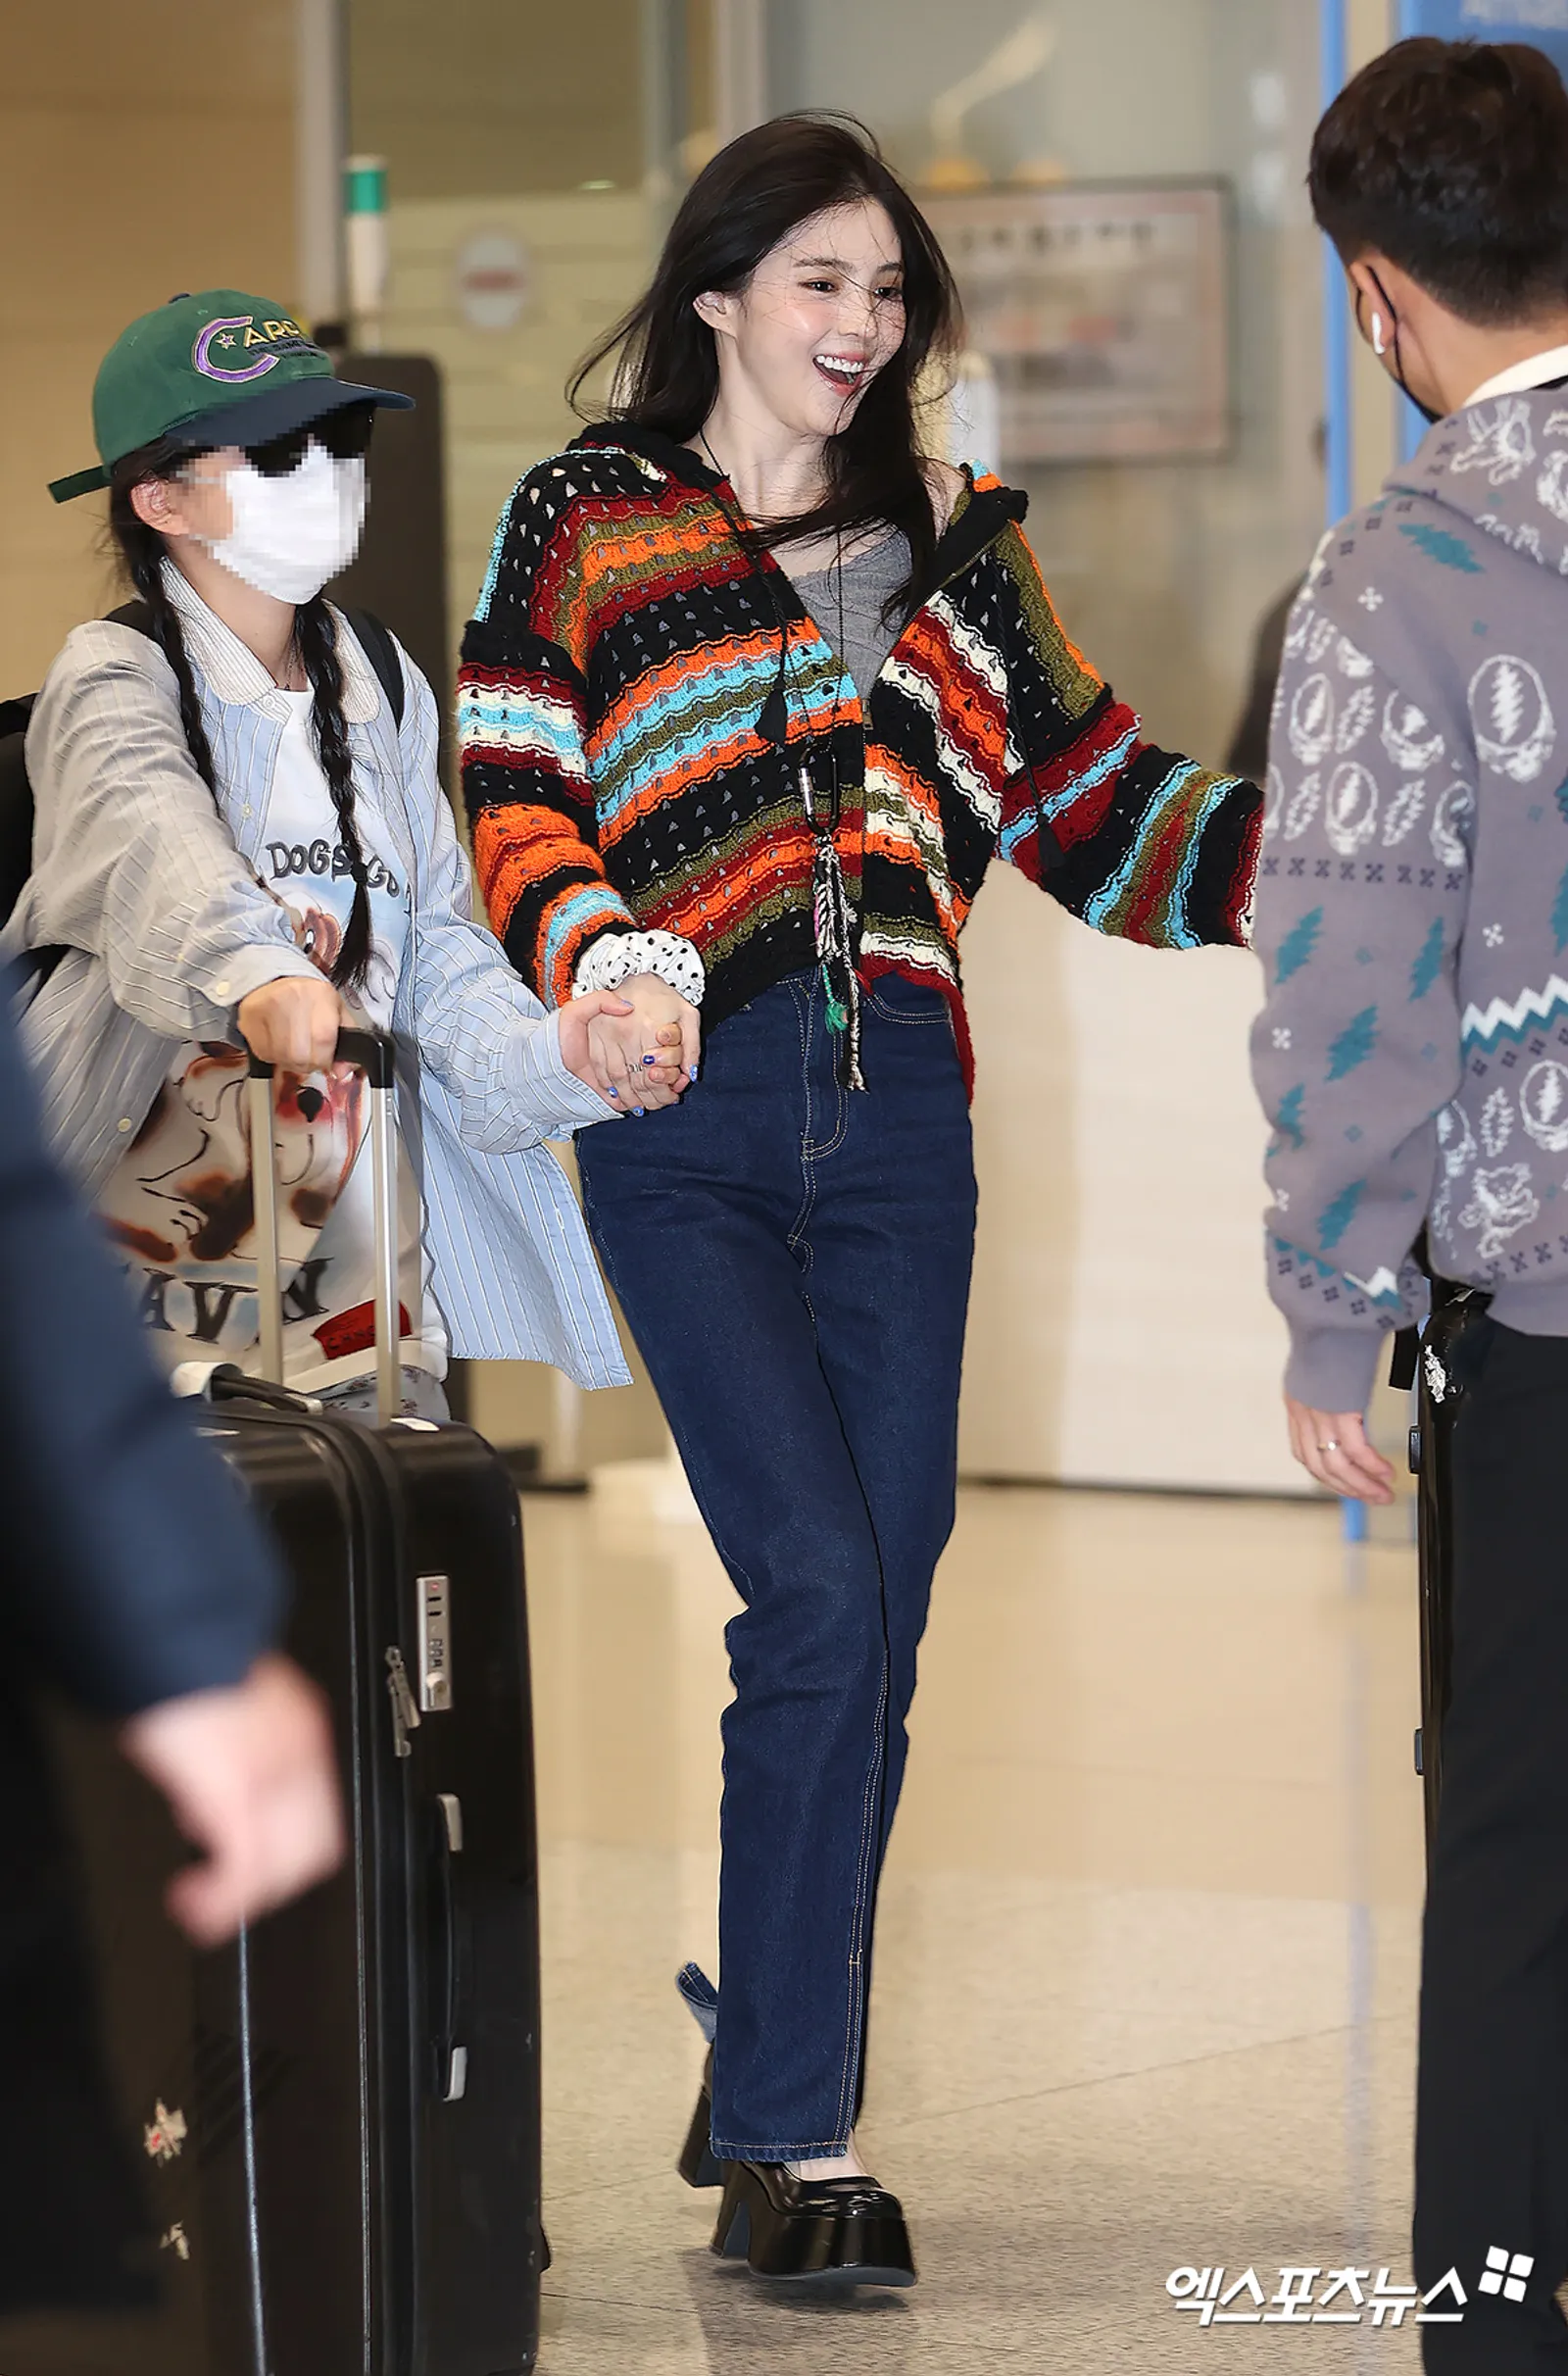 Gaya 'Ceria’ Han So Hee di Bandara Usai Liburan Bareng Ryu Jun Yeol